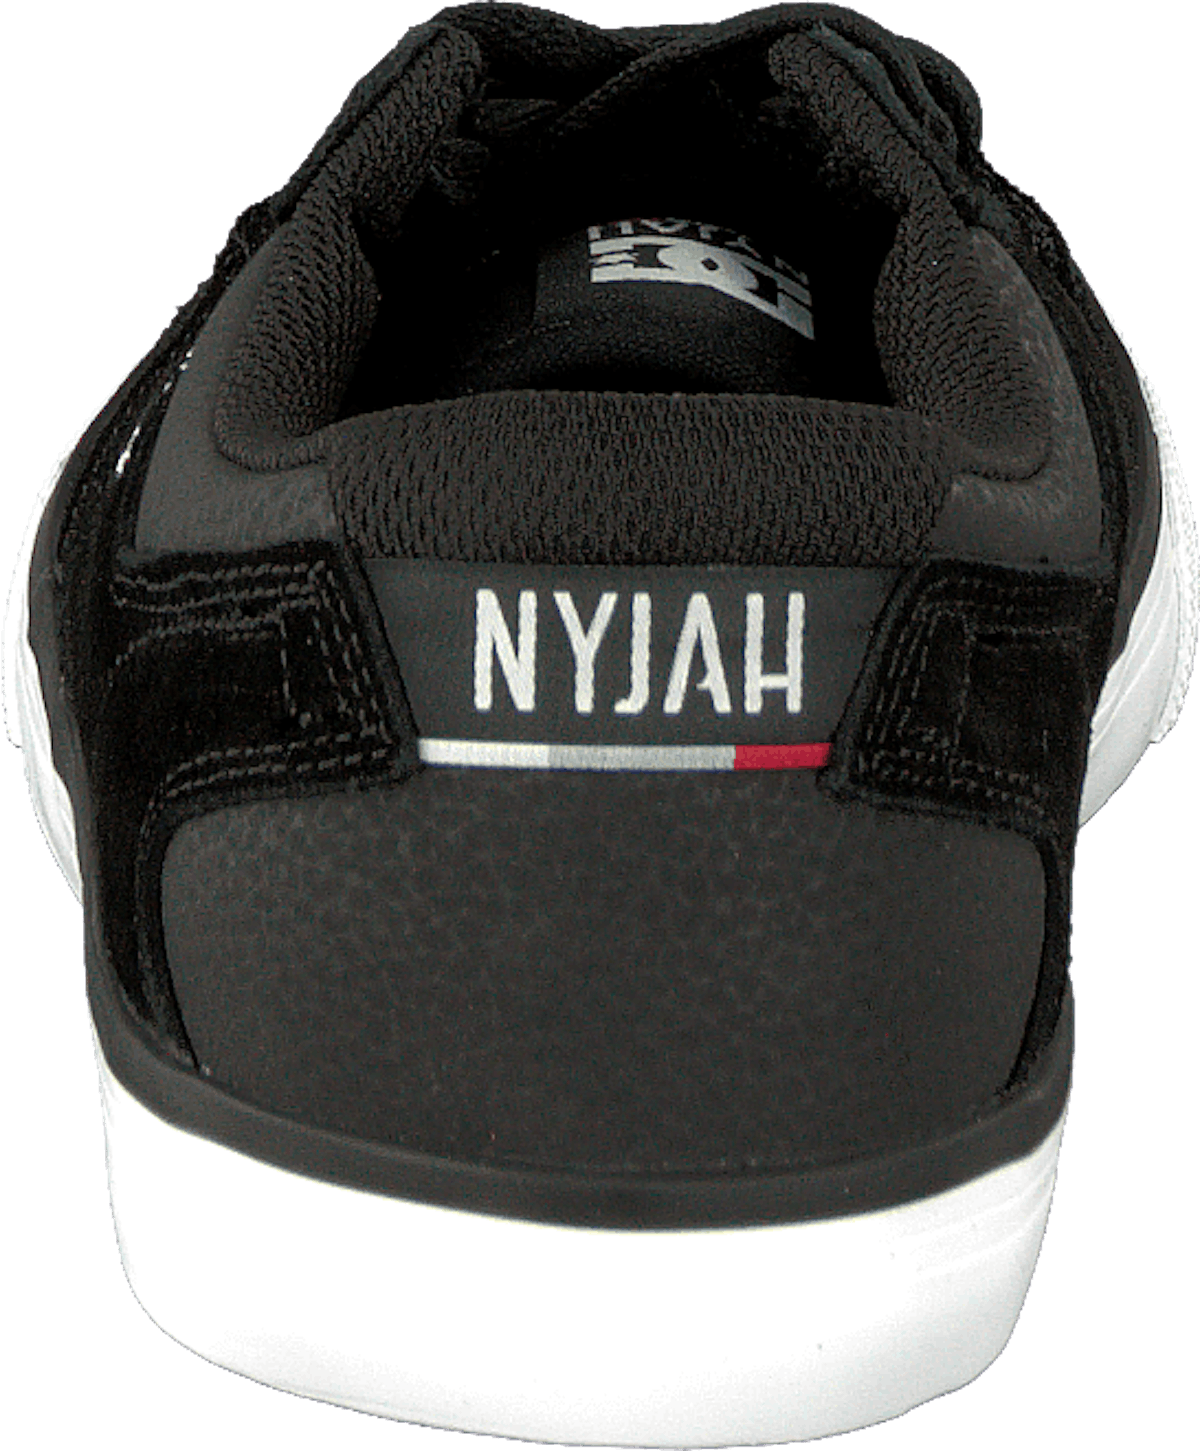 Nyjah Vulc Shoe Black/White